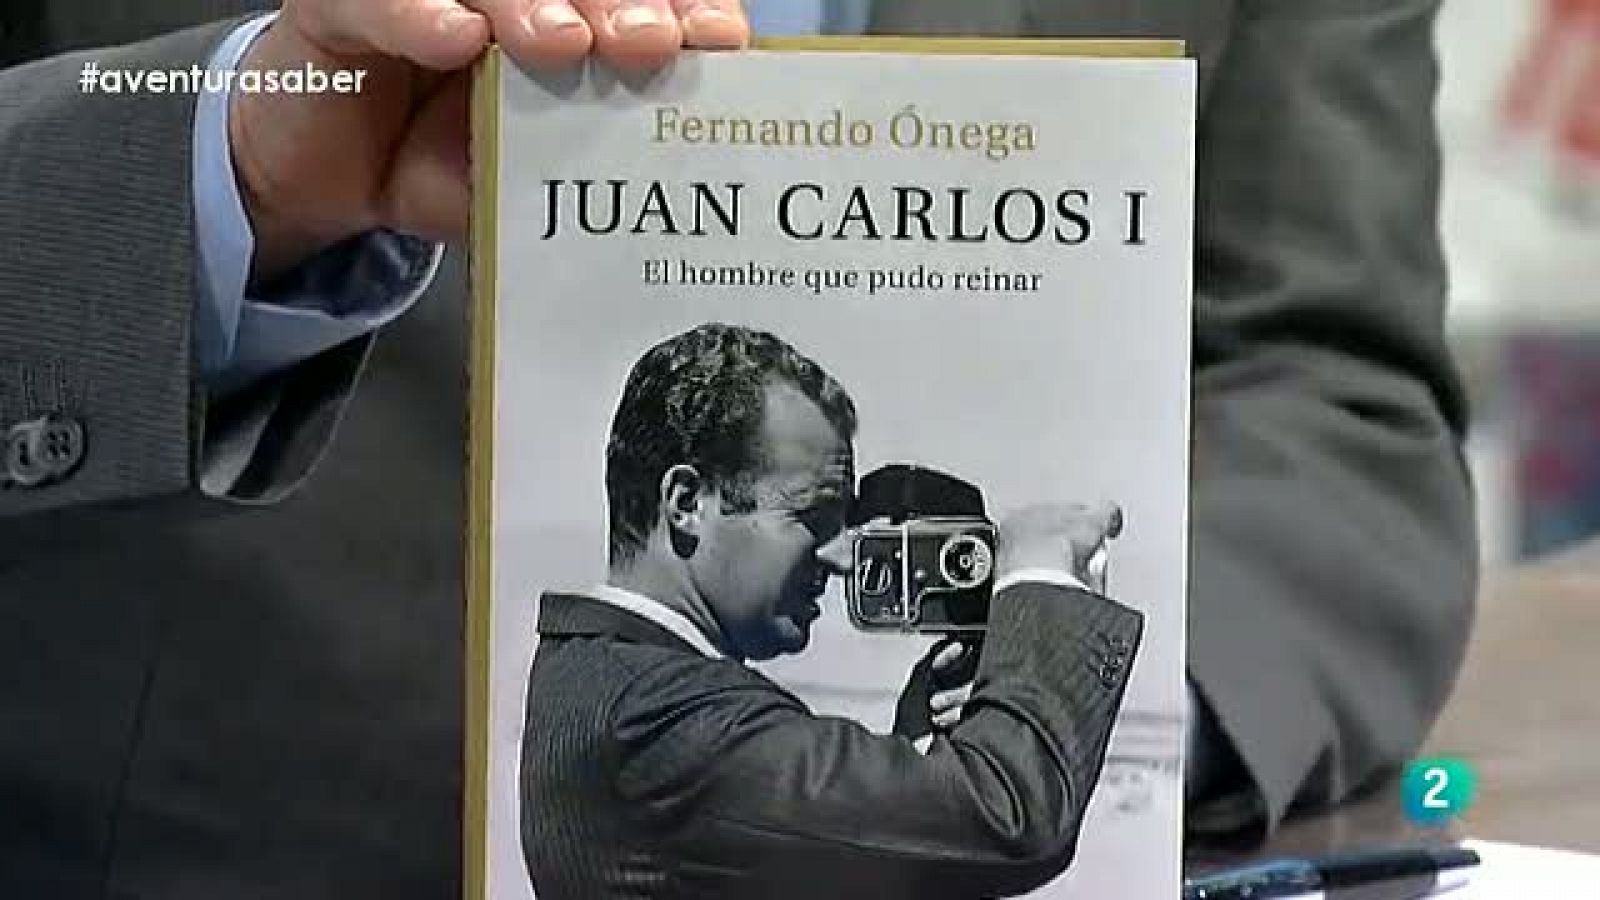 La aventura del Saber: La Aventura del Saber. Fernando Ónega. Juan Carlos I, el hombre que pudo reinar | RTVE Play